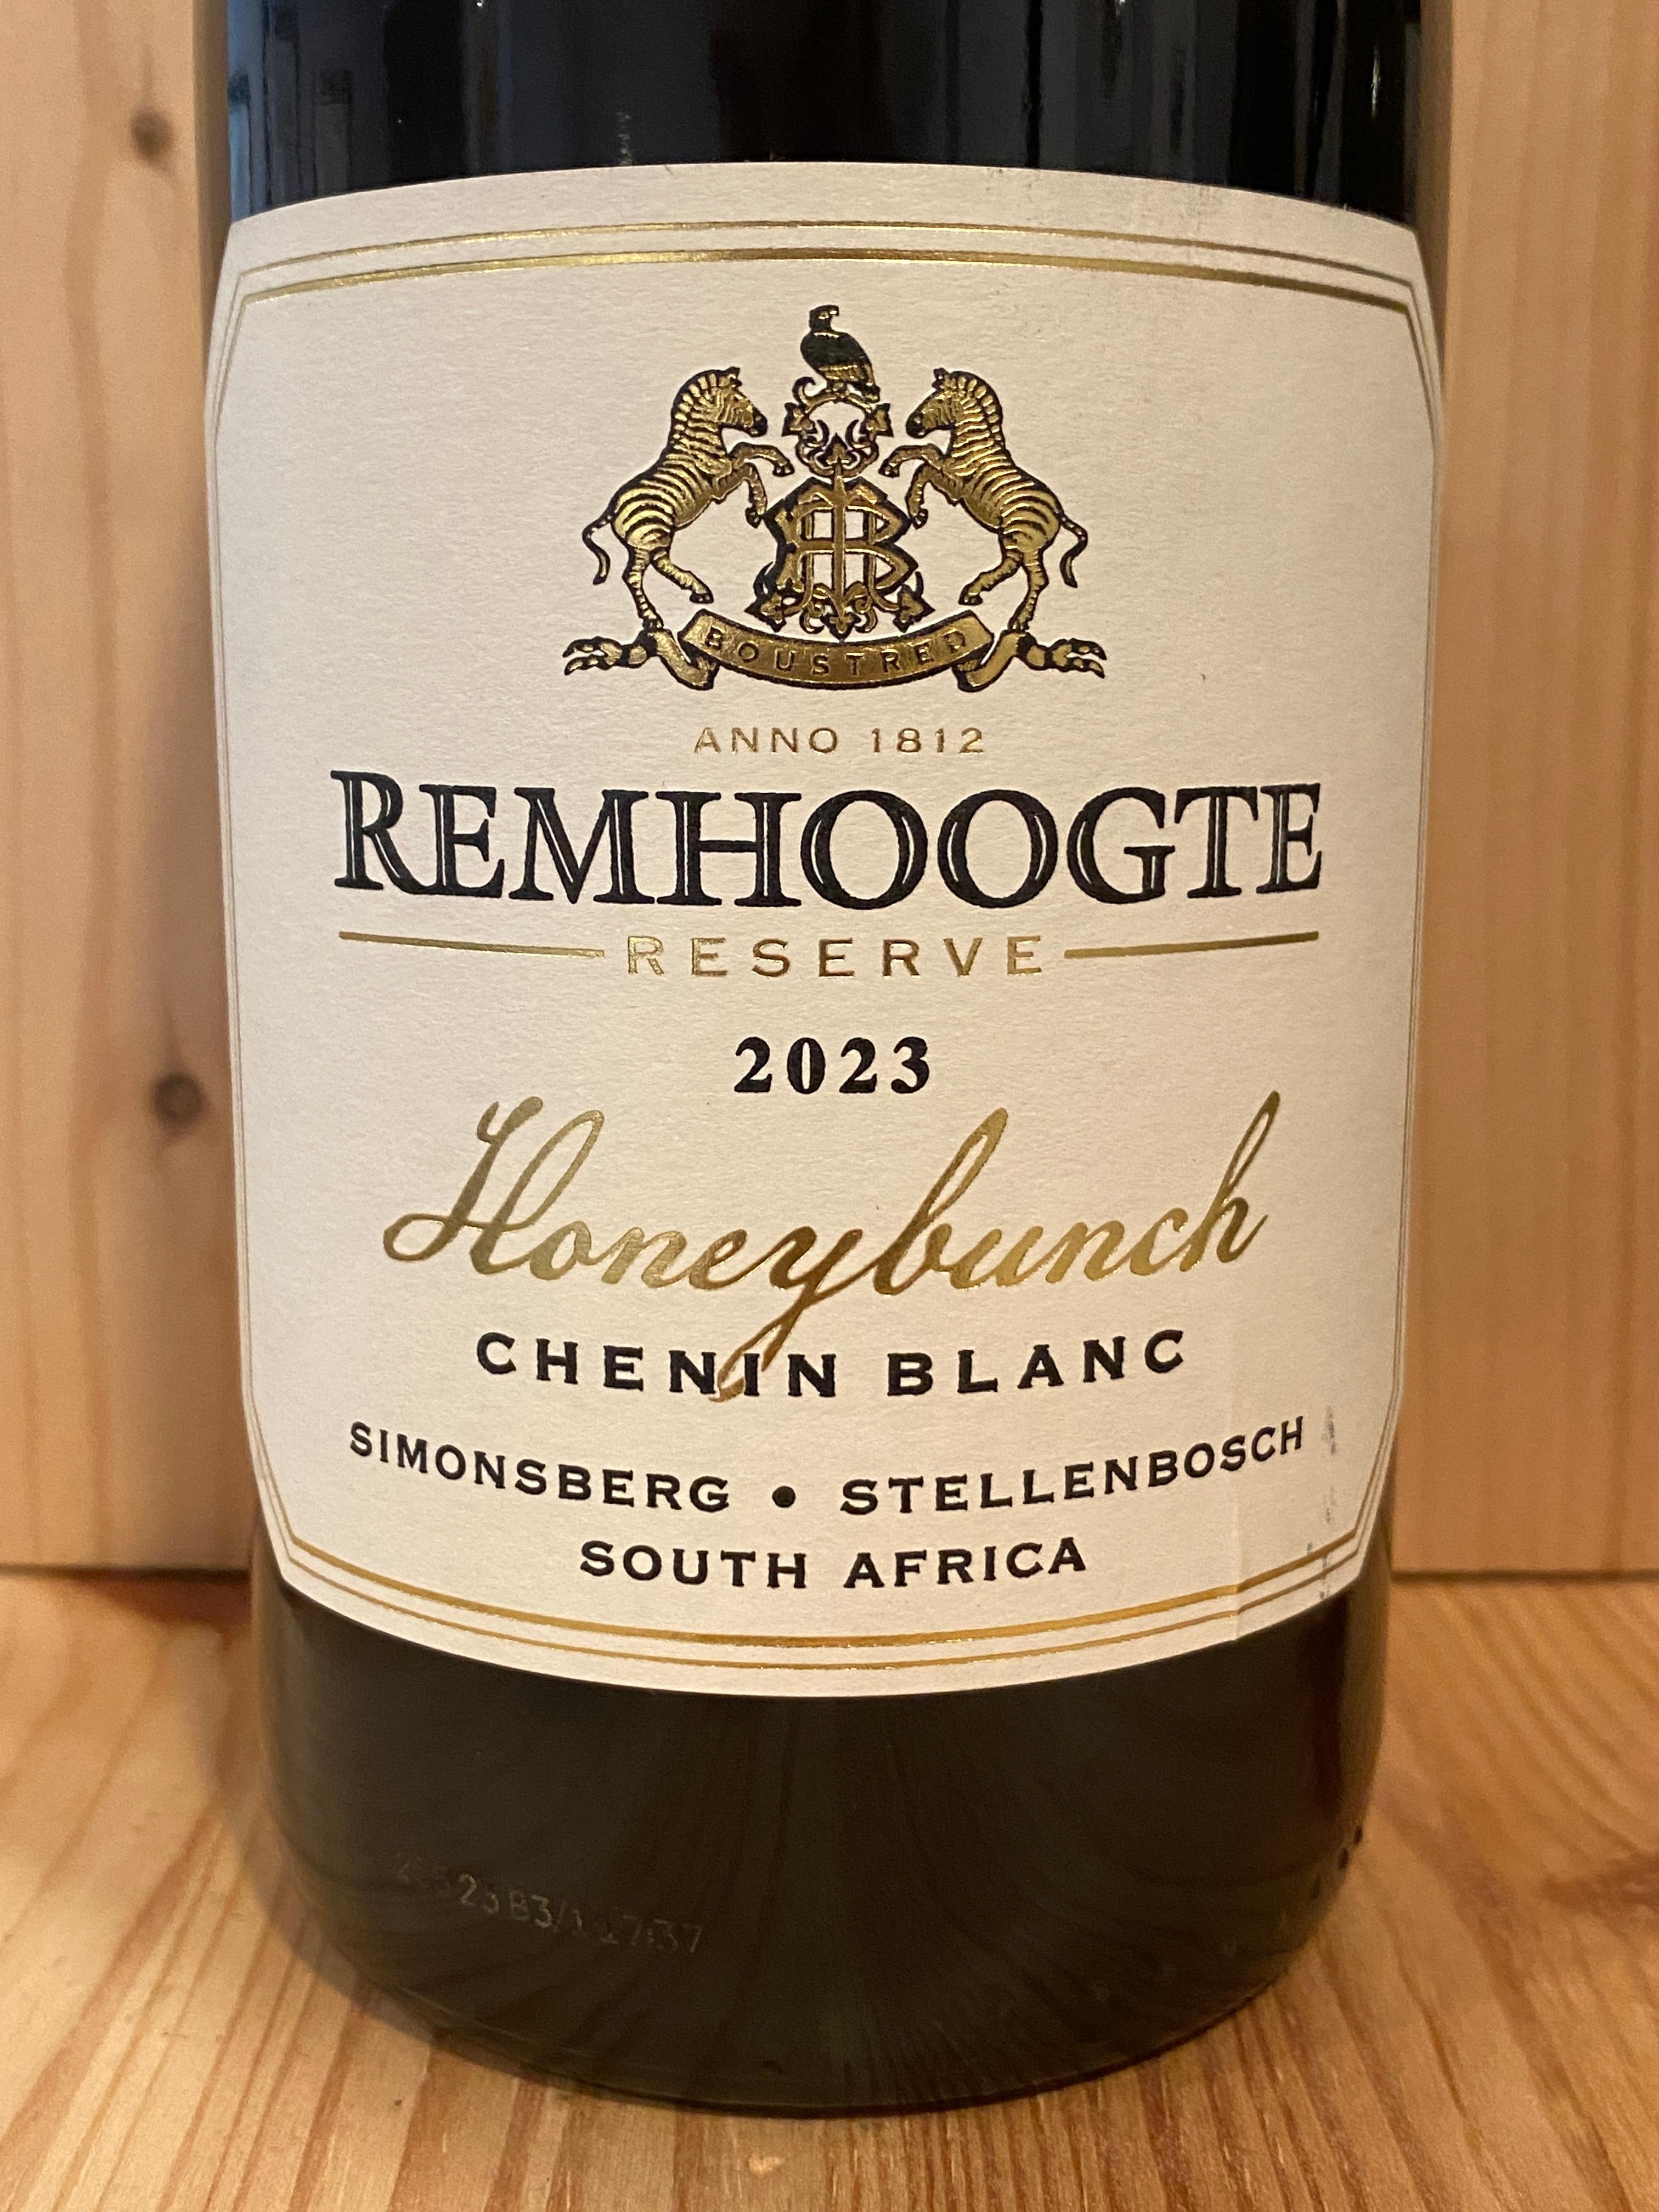 Remhoogte "Honeybunch" Chenin Blanc 2023: Simonsberg-Stellenbosch, South Africa